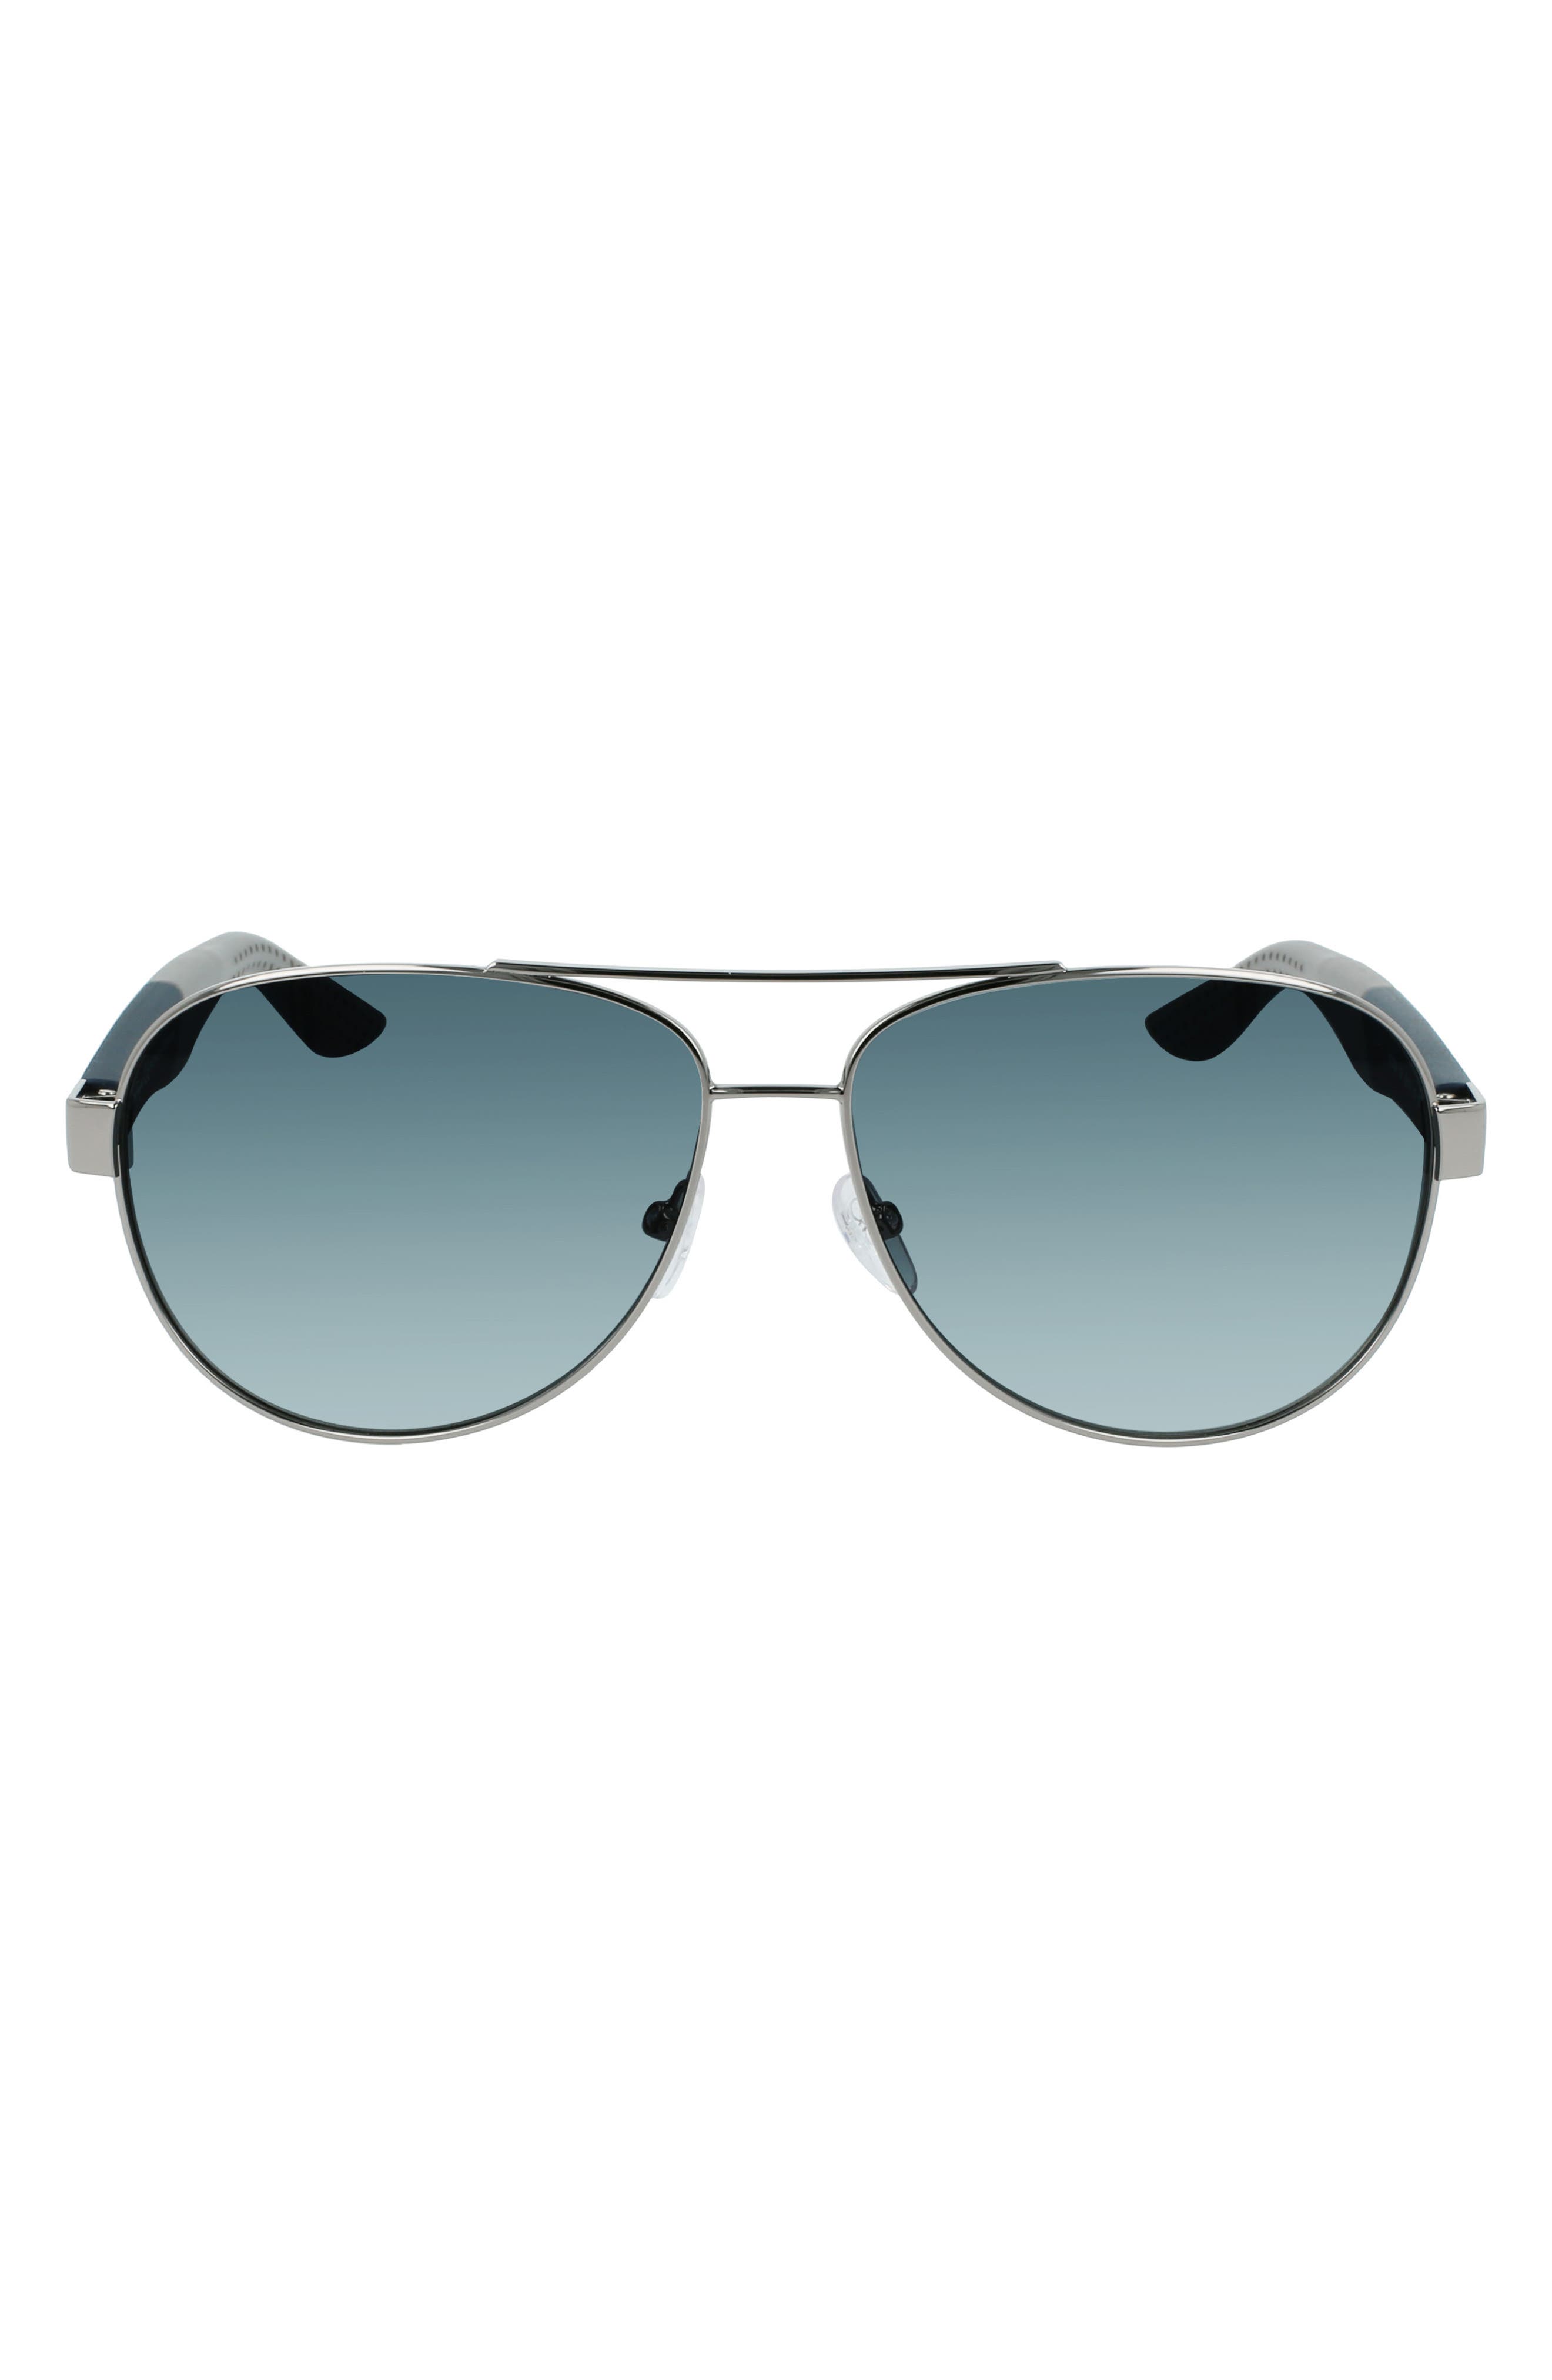 Salvatore Ferragamo Lifestyle 61mm Aviator Sunglasses in Shiny Light Rutheriu at Nordstrom